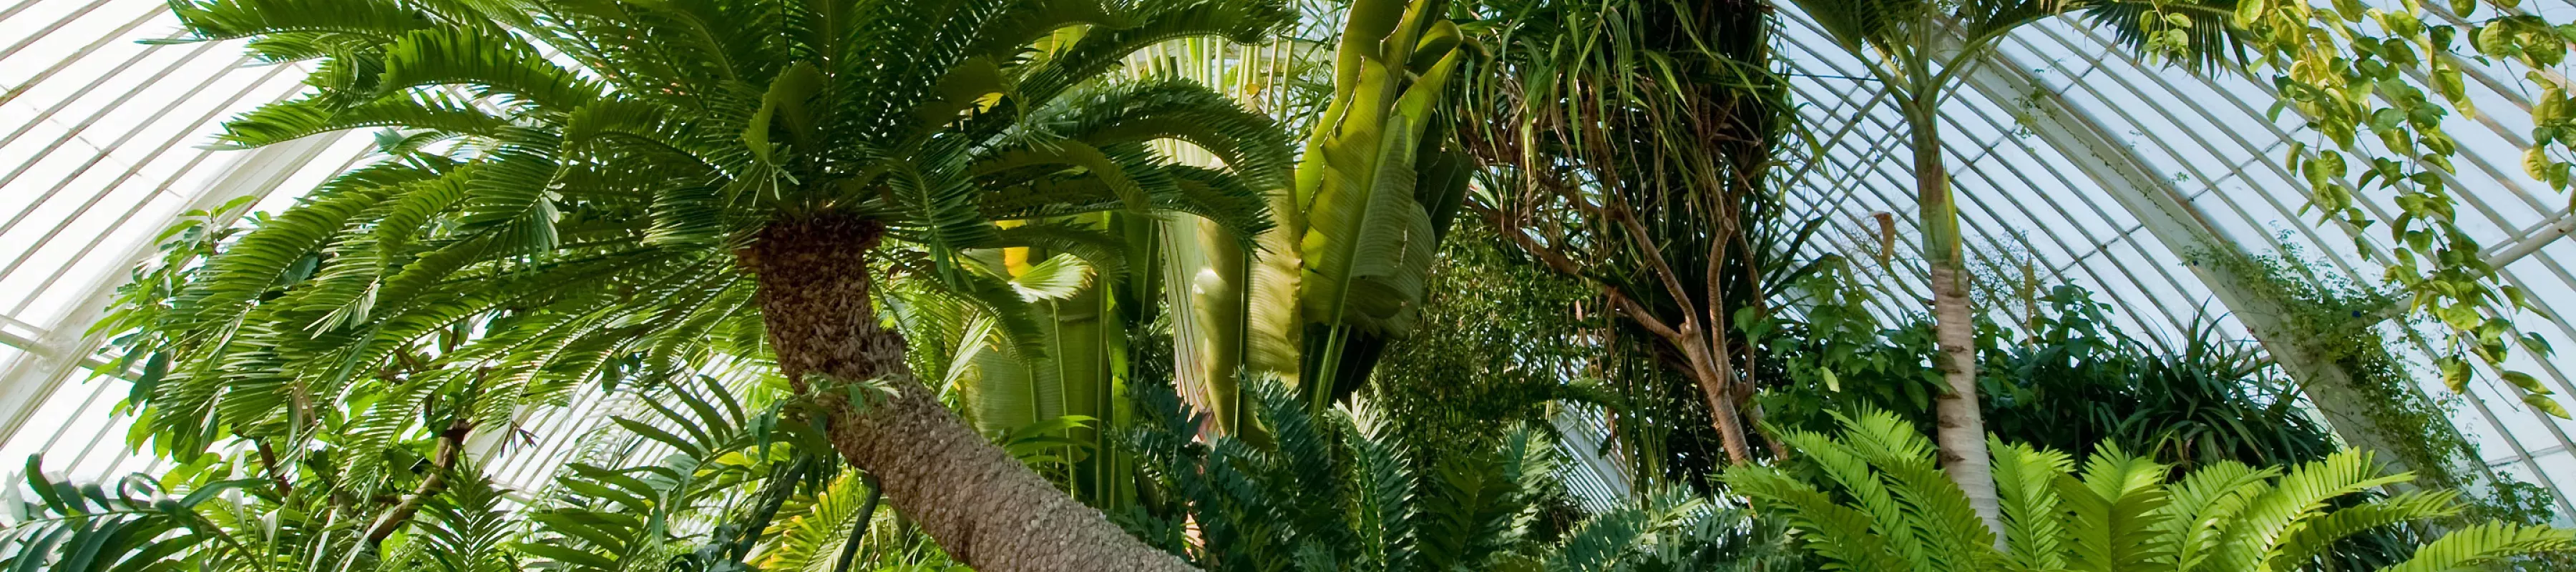 The Eastern Cape giant cycad (Encephalartos altensteinii) in the Palm House